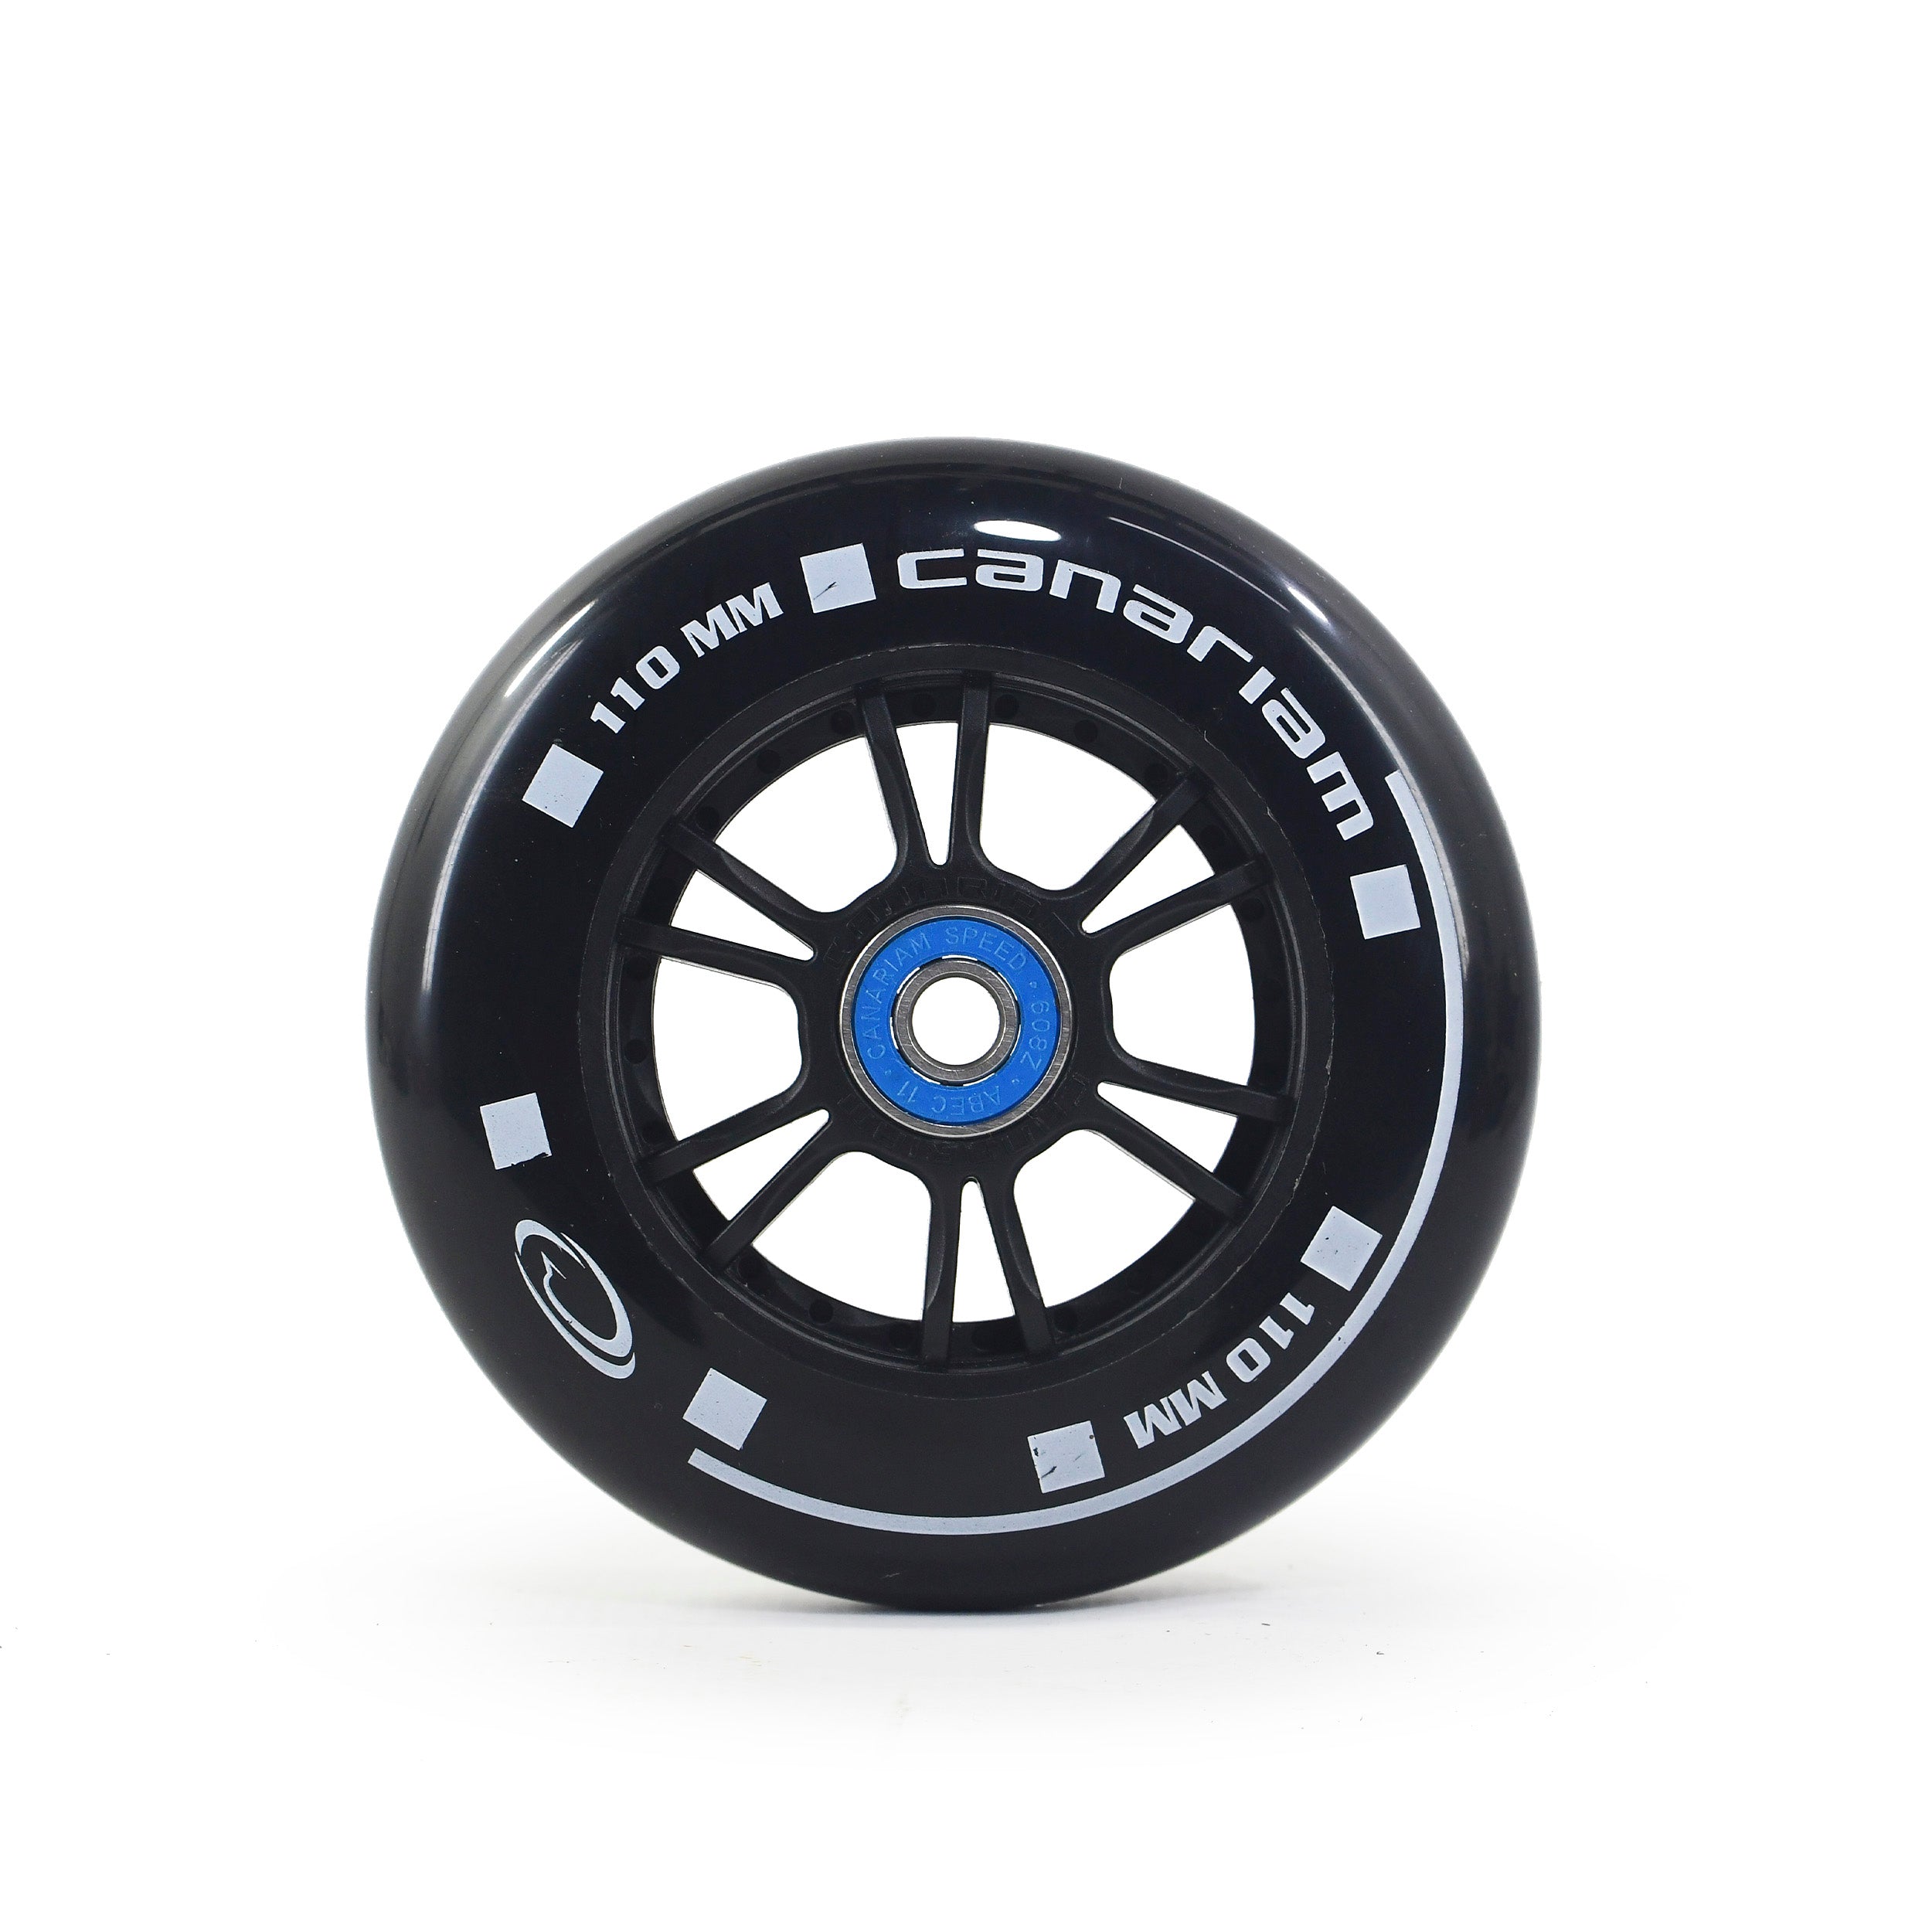 Canariam X-Slide Wheel 110mm 85a BLACK UNIT w/ Abec11 Bearings Canariam Urban Skates